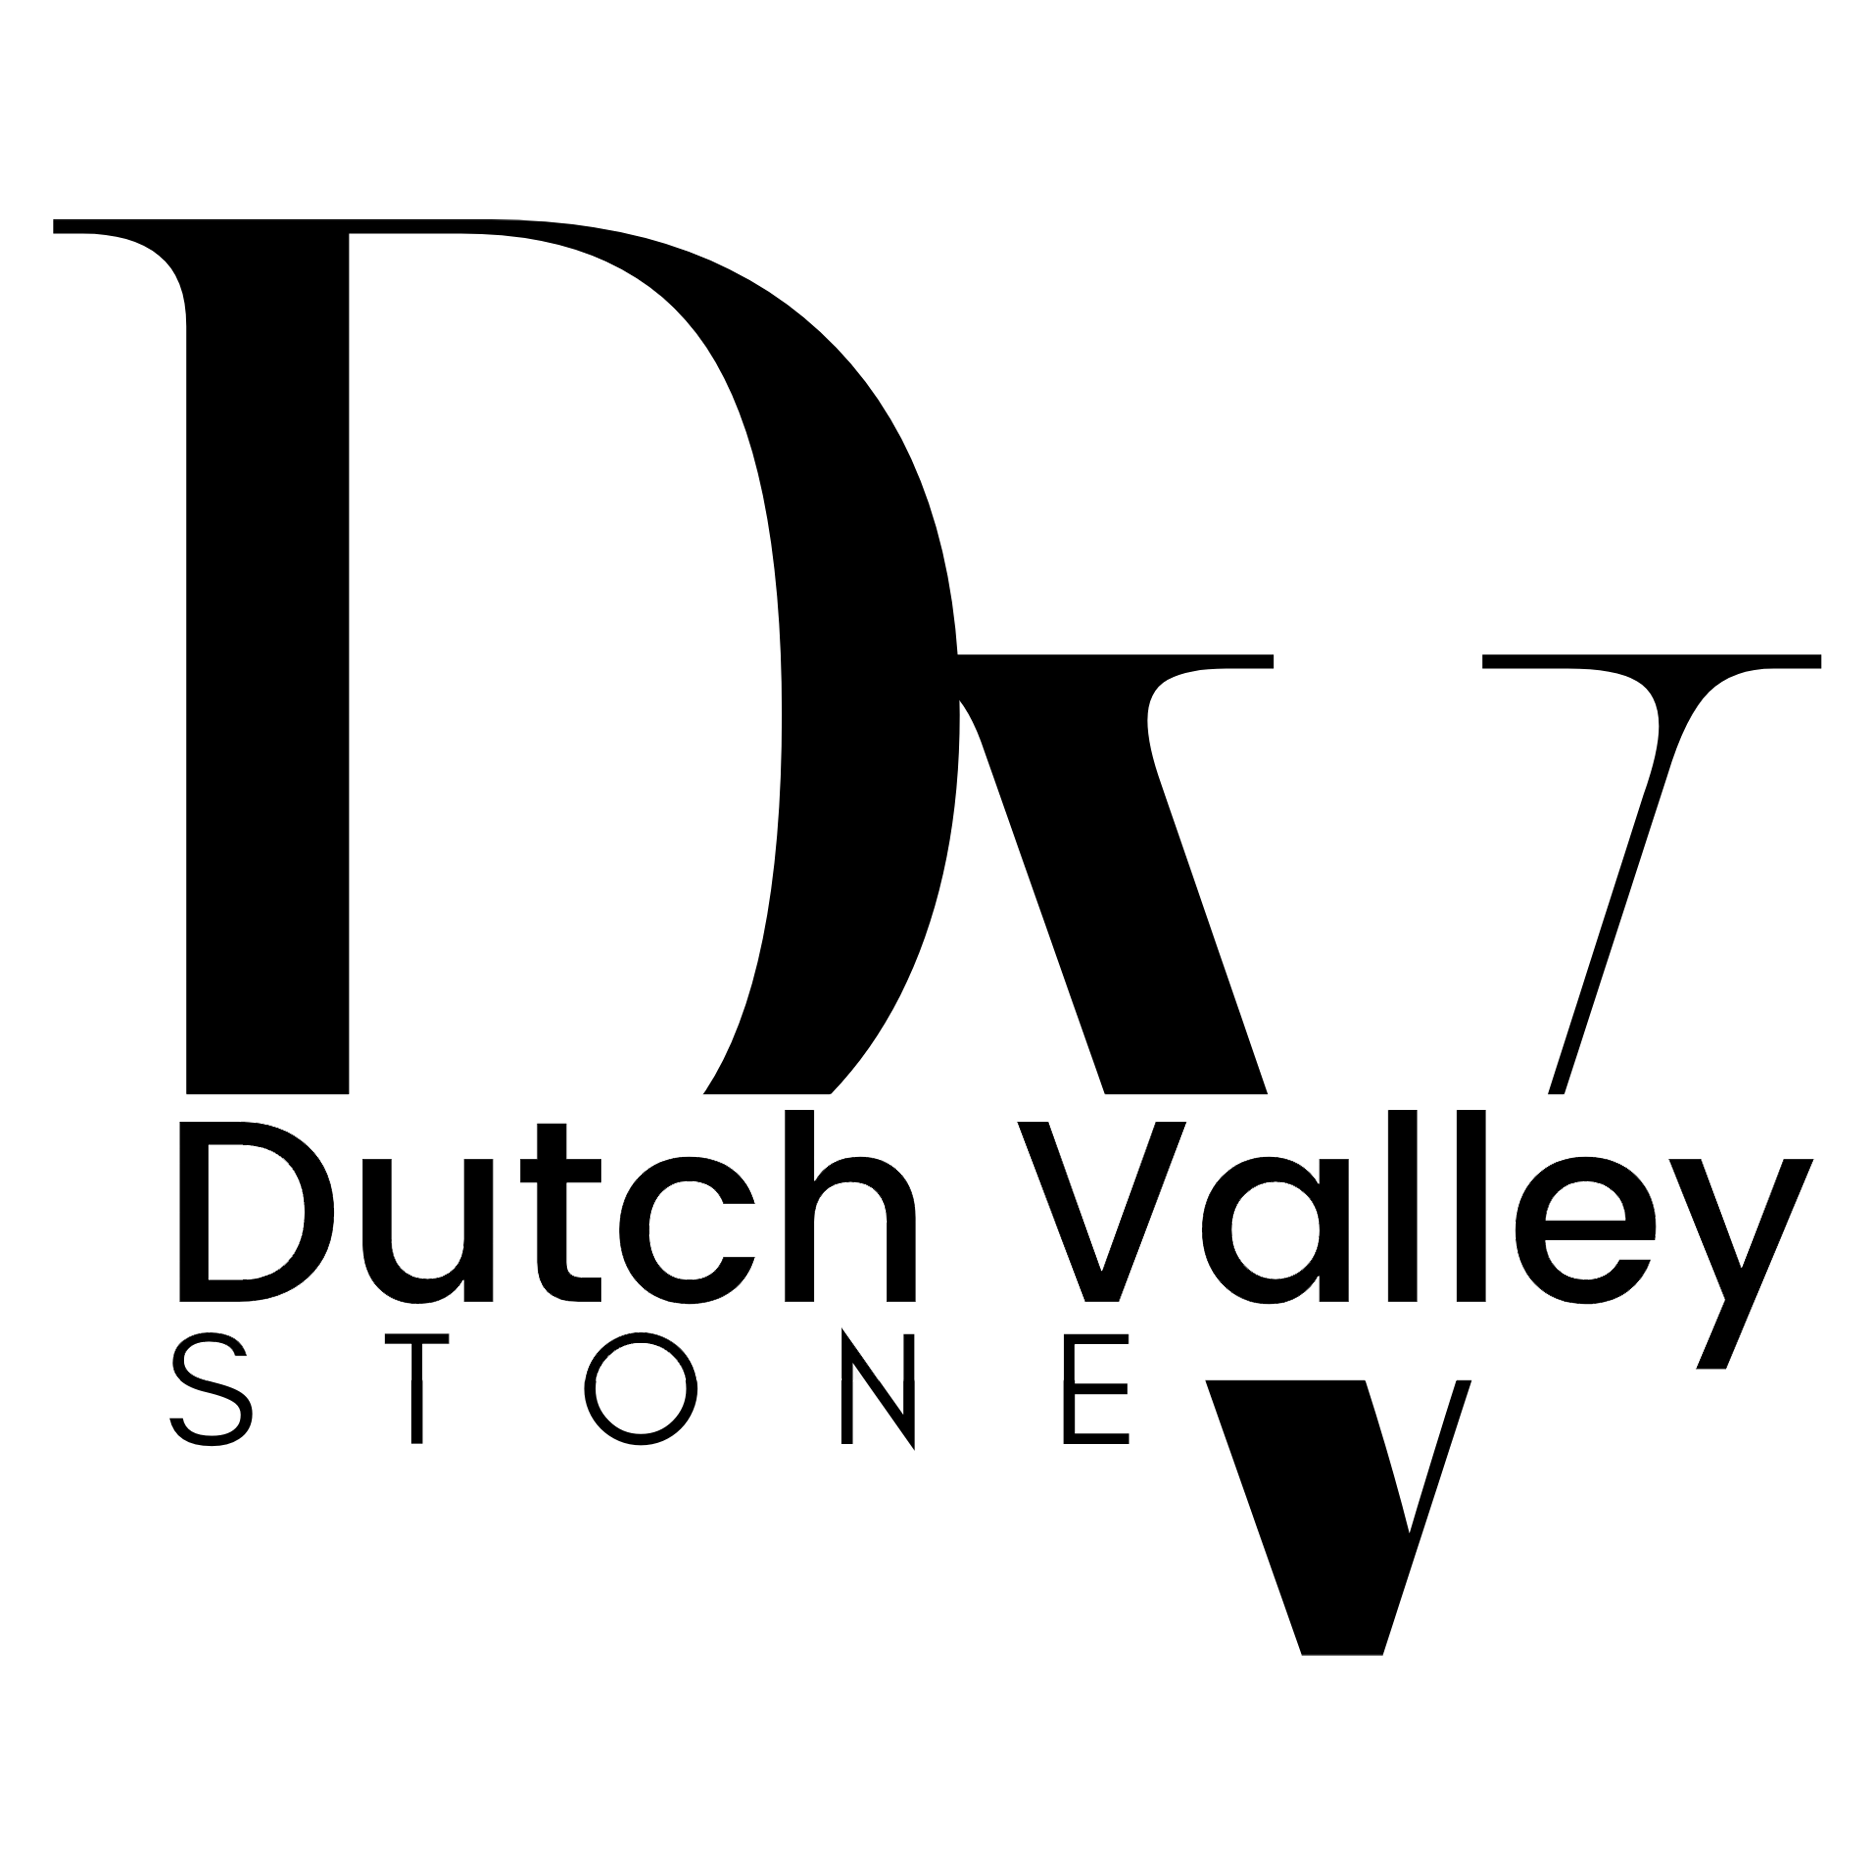 dutch valley stone placeholder logo 1